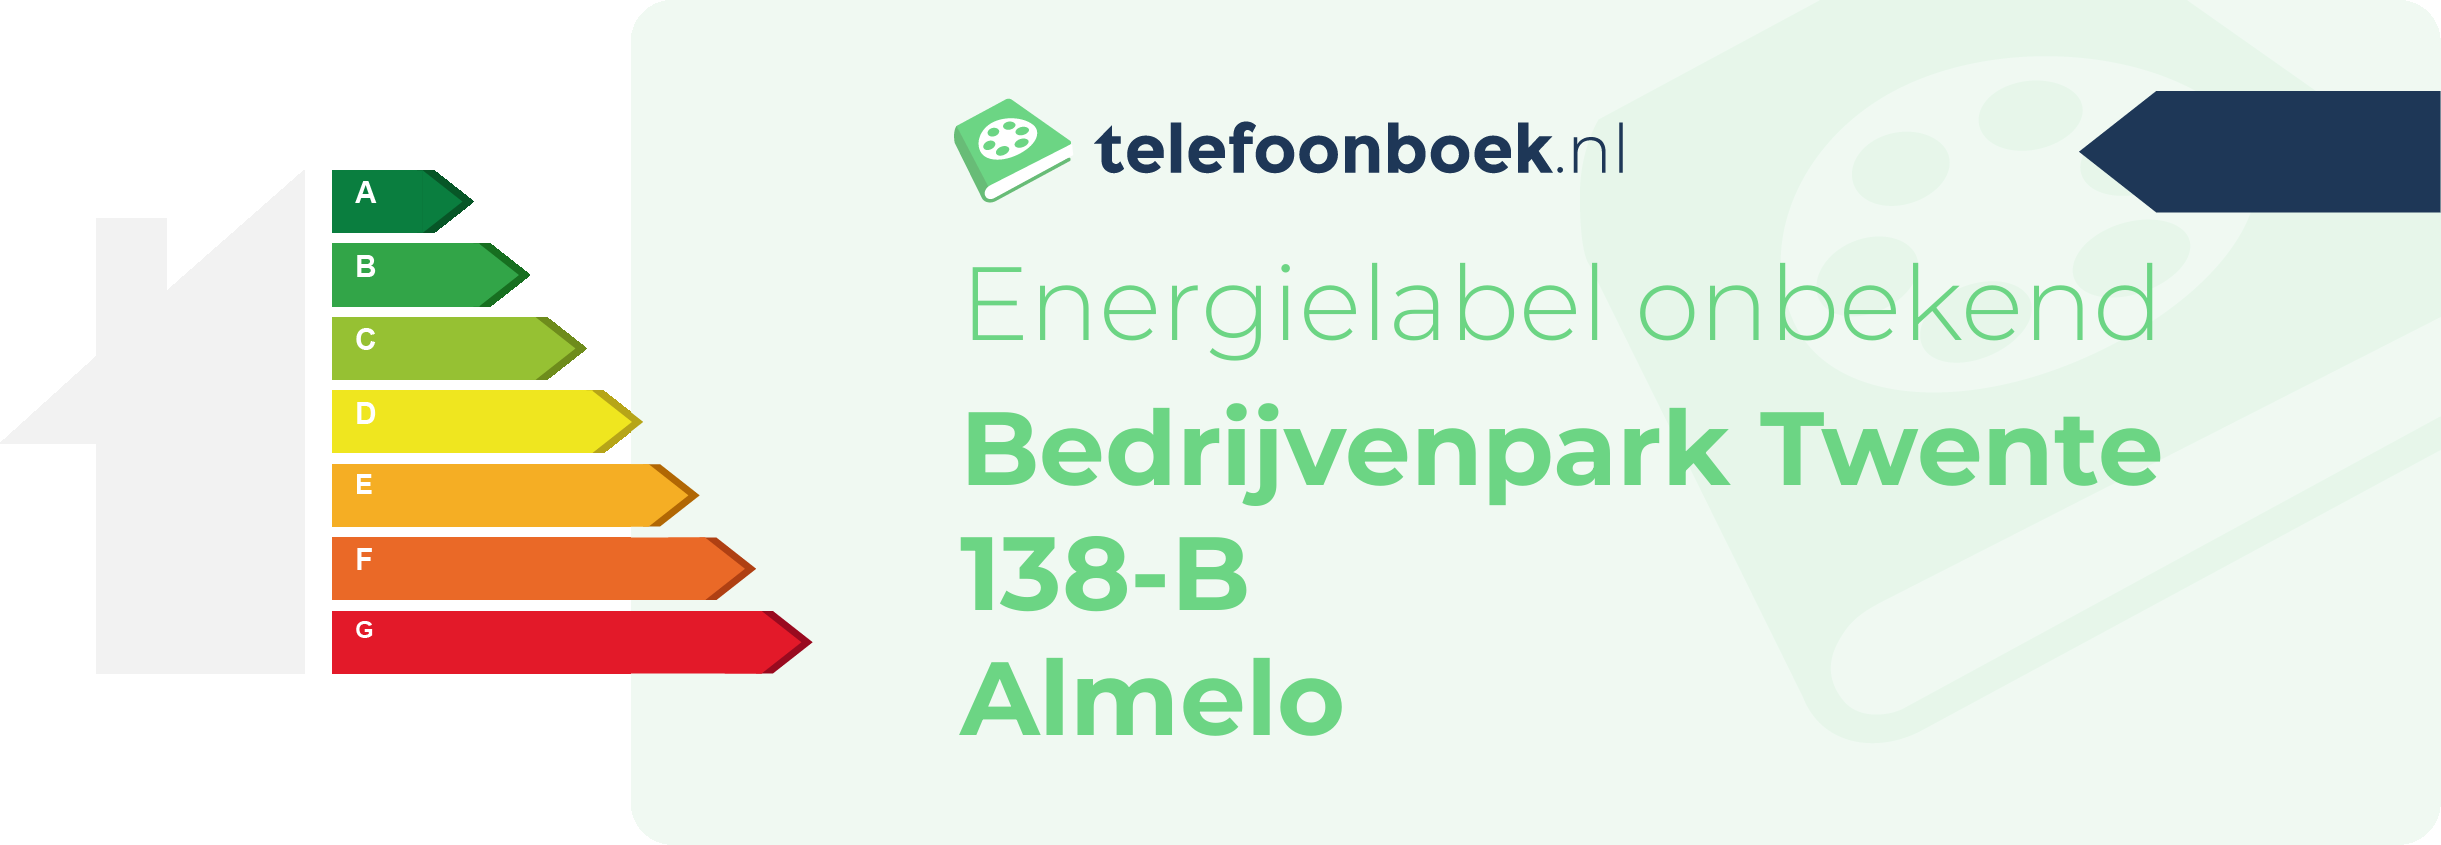 Energielabel Bedrijvenpark Twente 138-B Almelo